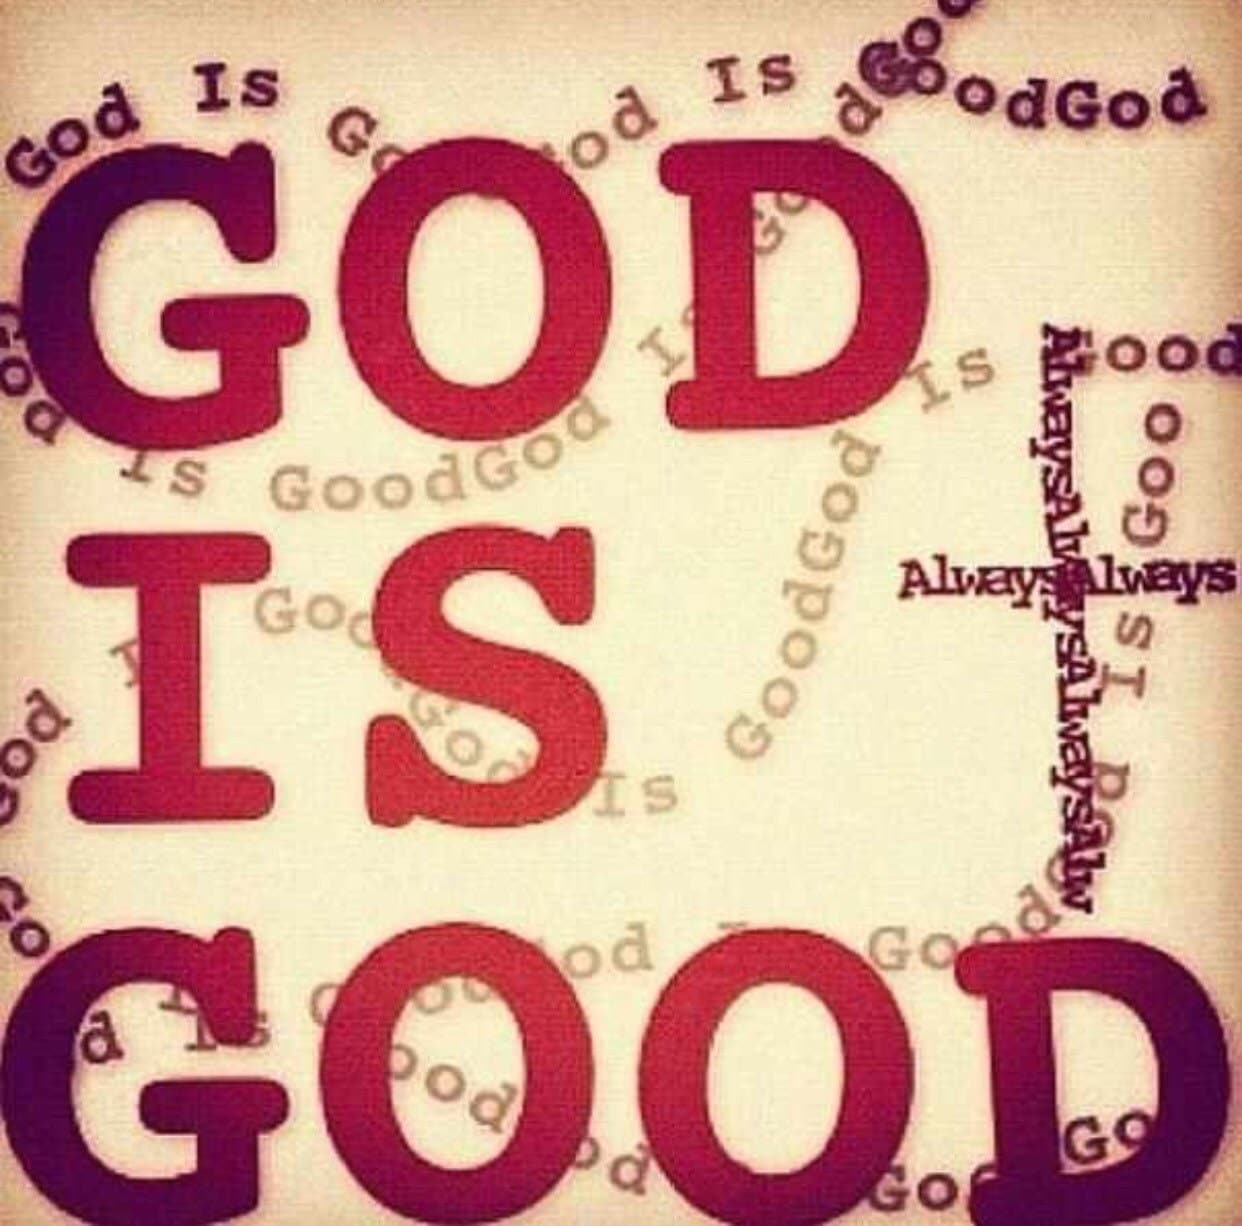 God is life. God is good.